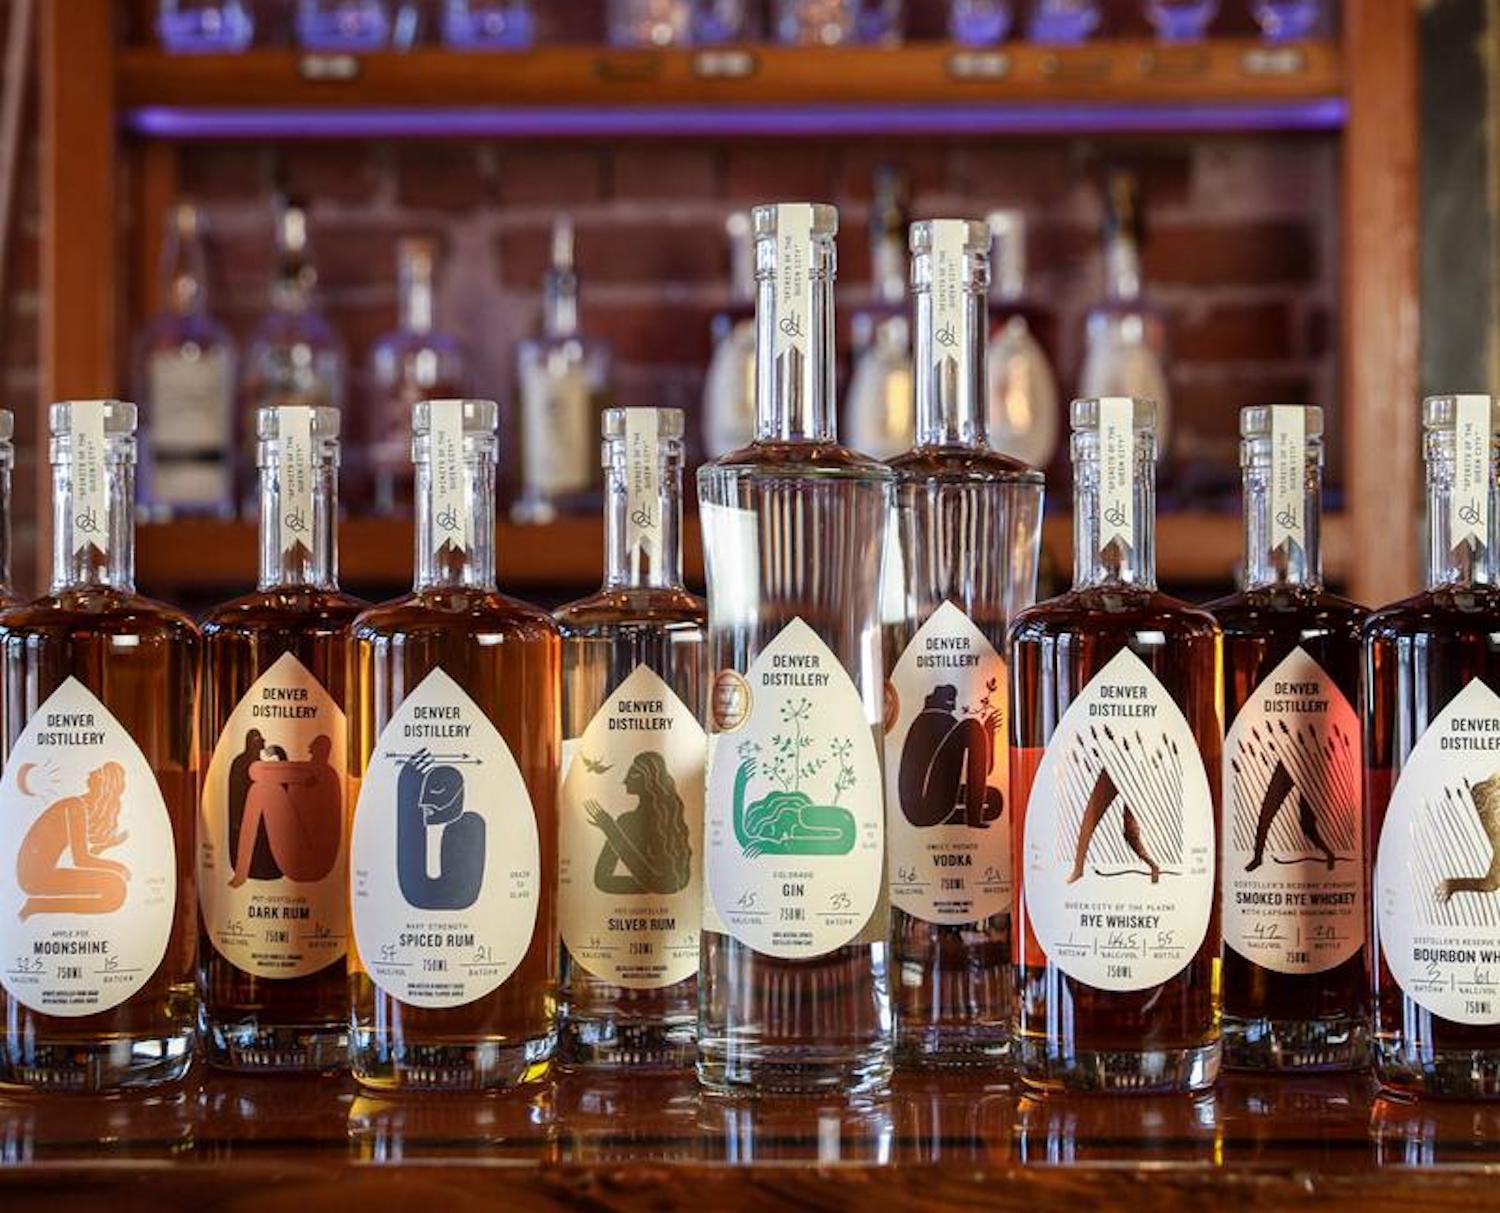 Denver Distillery spirit options shown